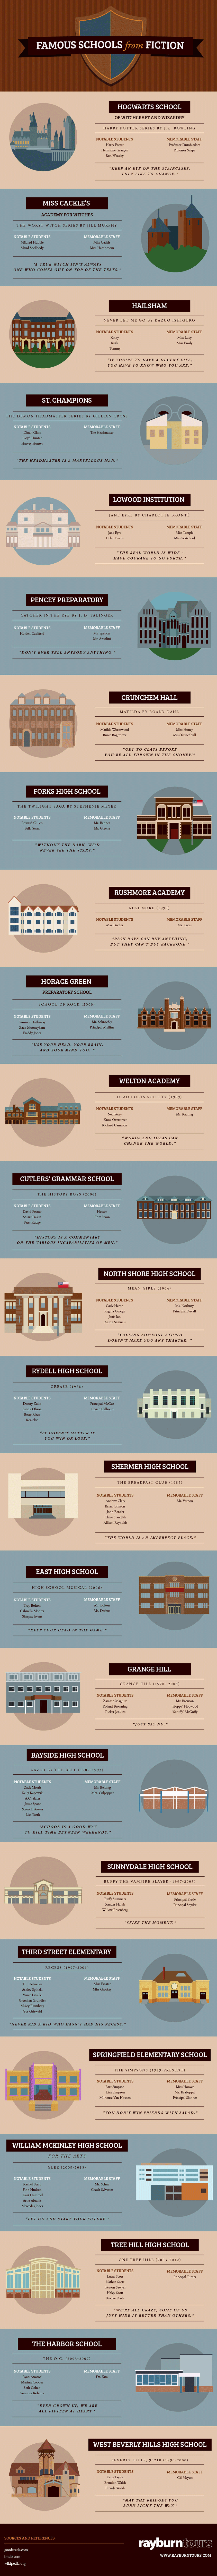 famous schools